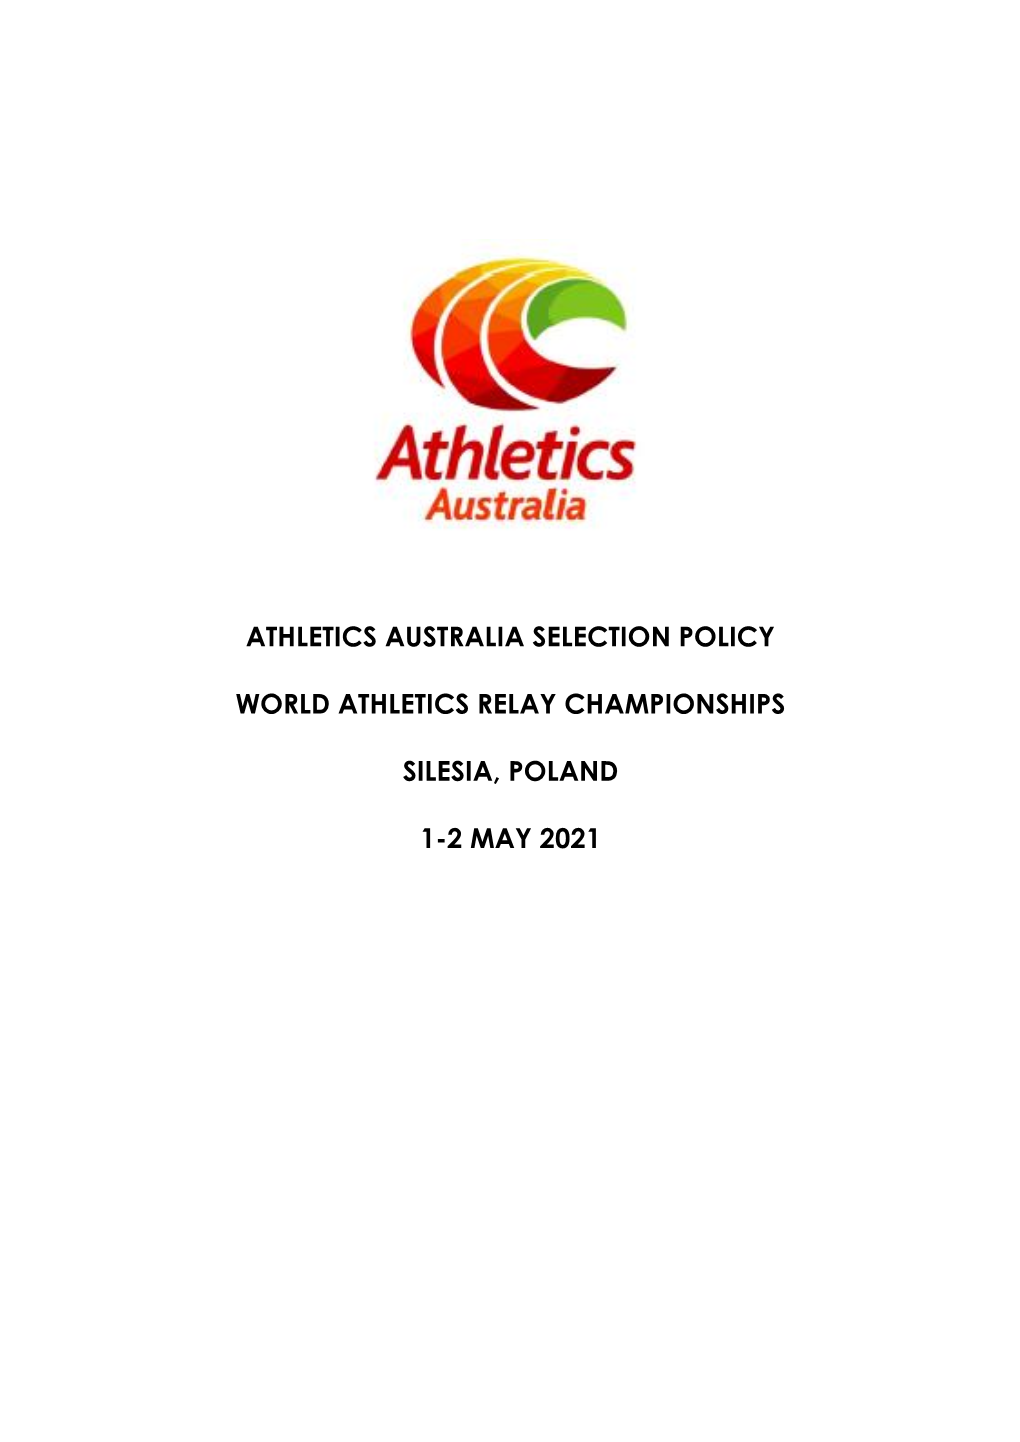 Athletics Australia Selection Policy World Athletics Relay Championships Silesia, Poland 1-2 May 2021